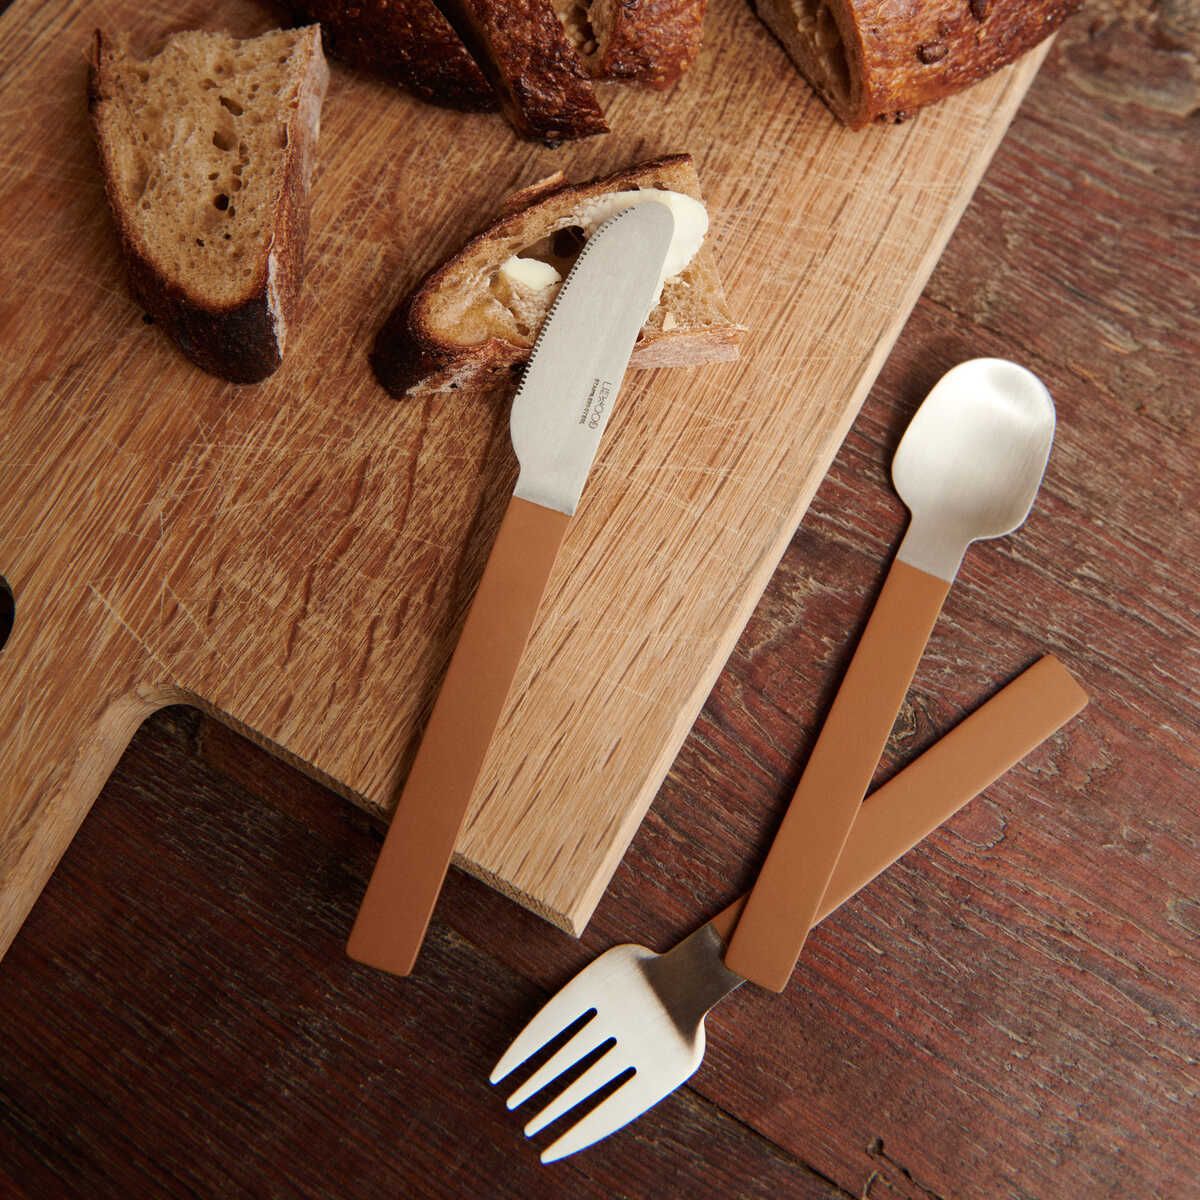 Adrian junior cutlery set